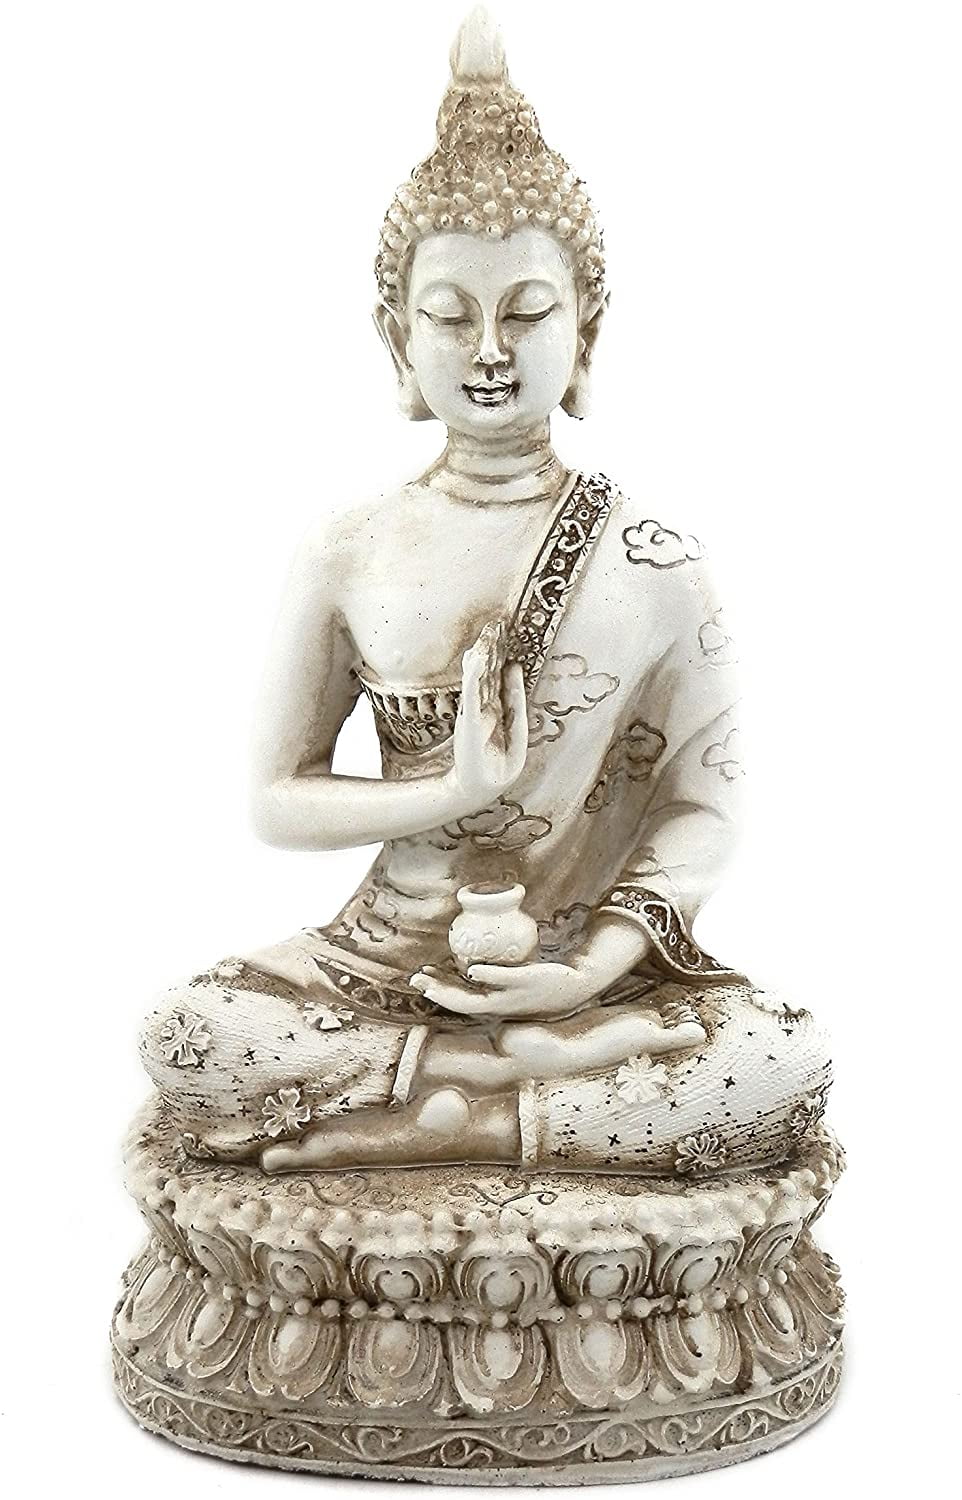 Ornerx Thai Sitting Buddha Statue For Home Decor Ivory 6.7 